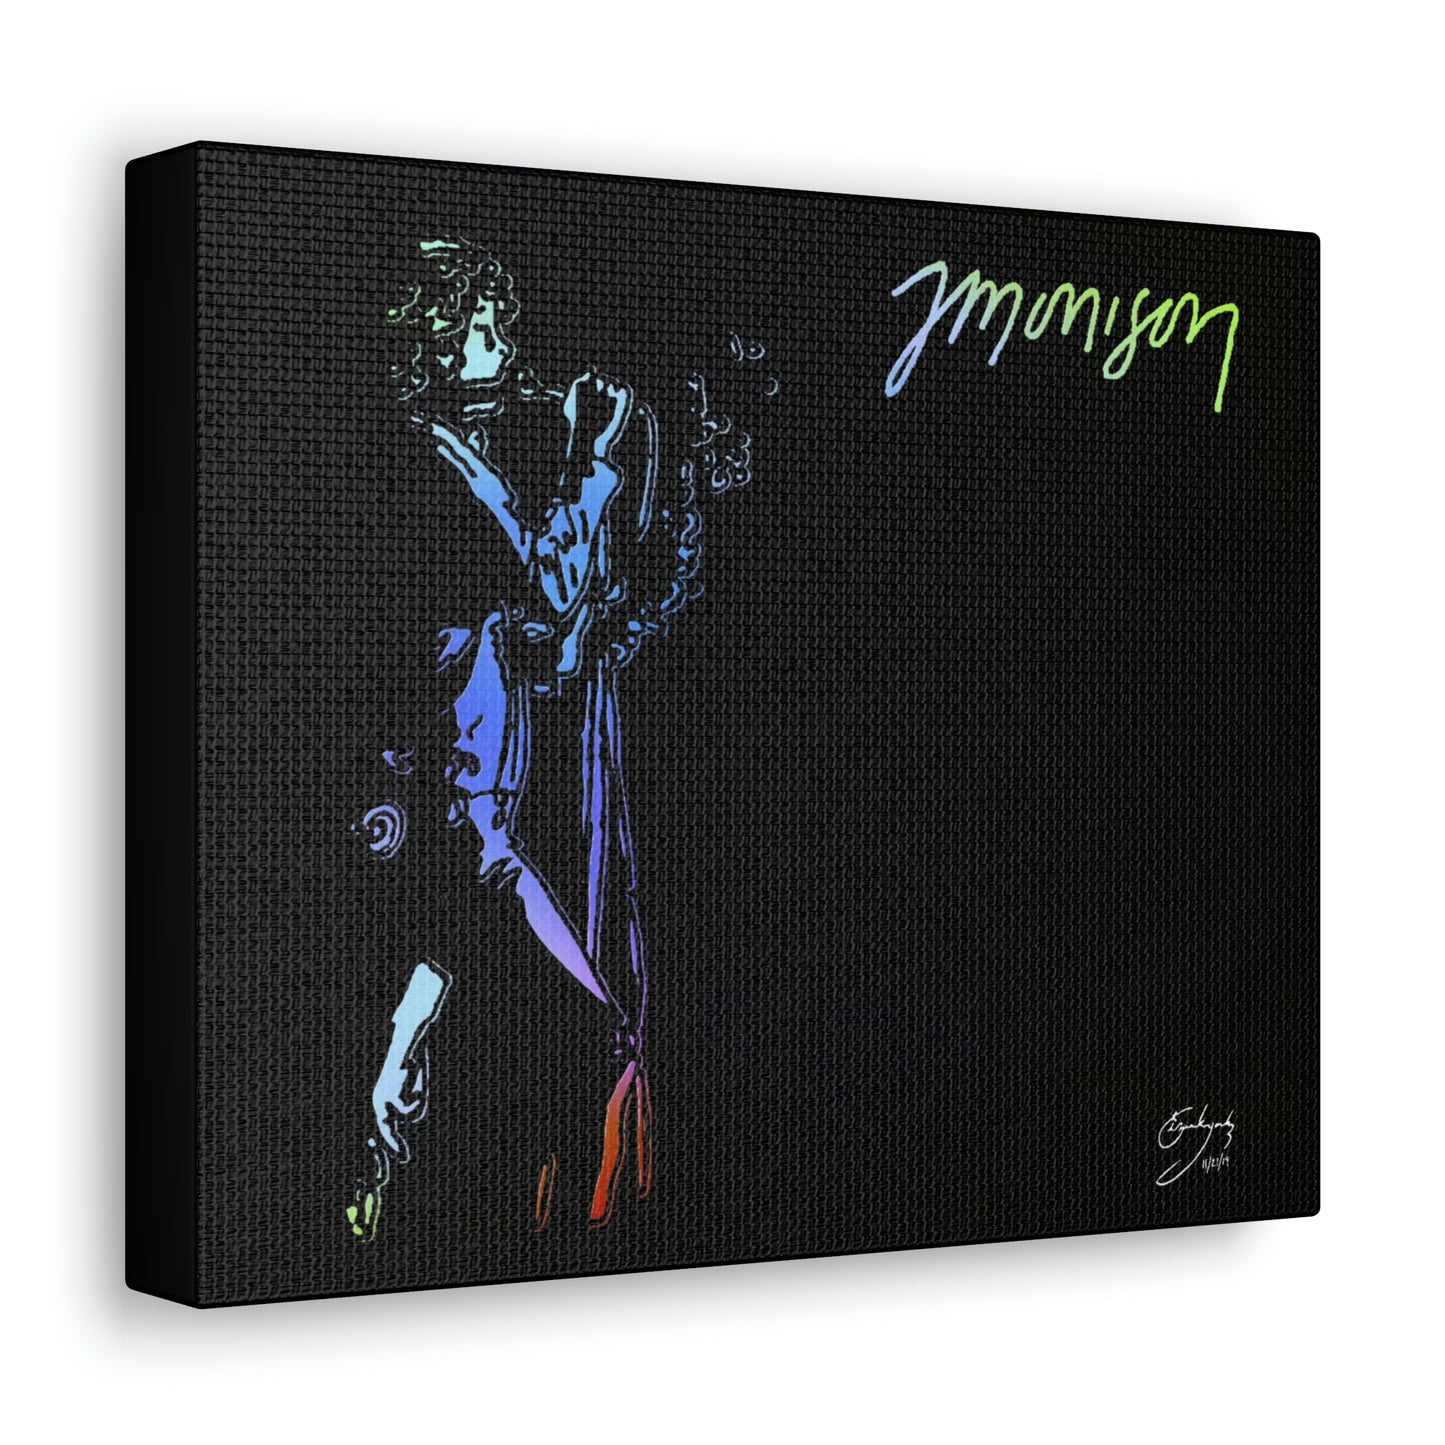 Jim Morrison 11/21/19